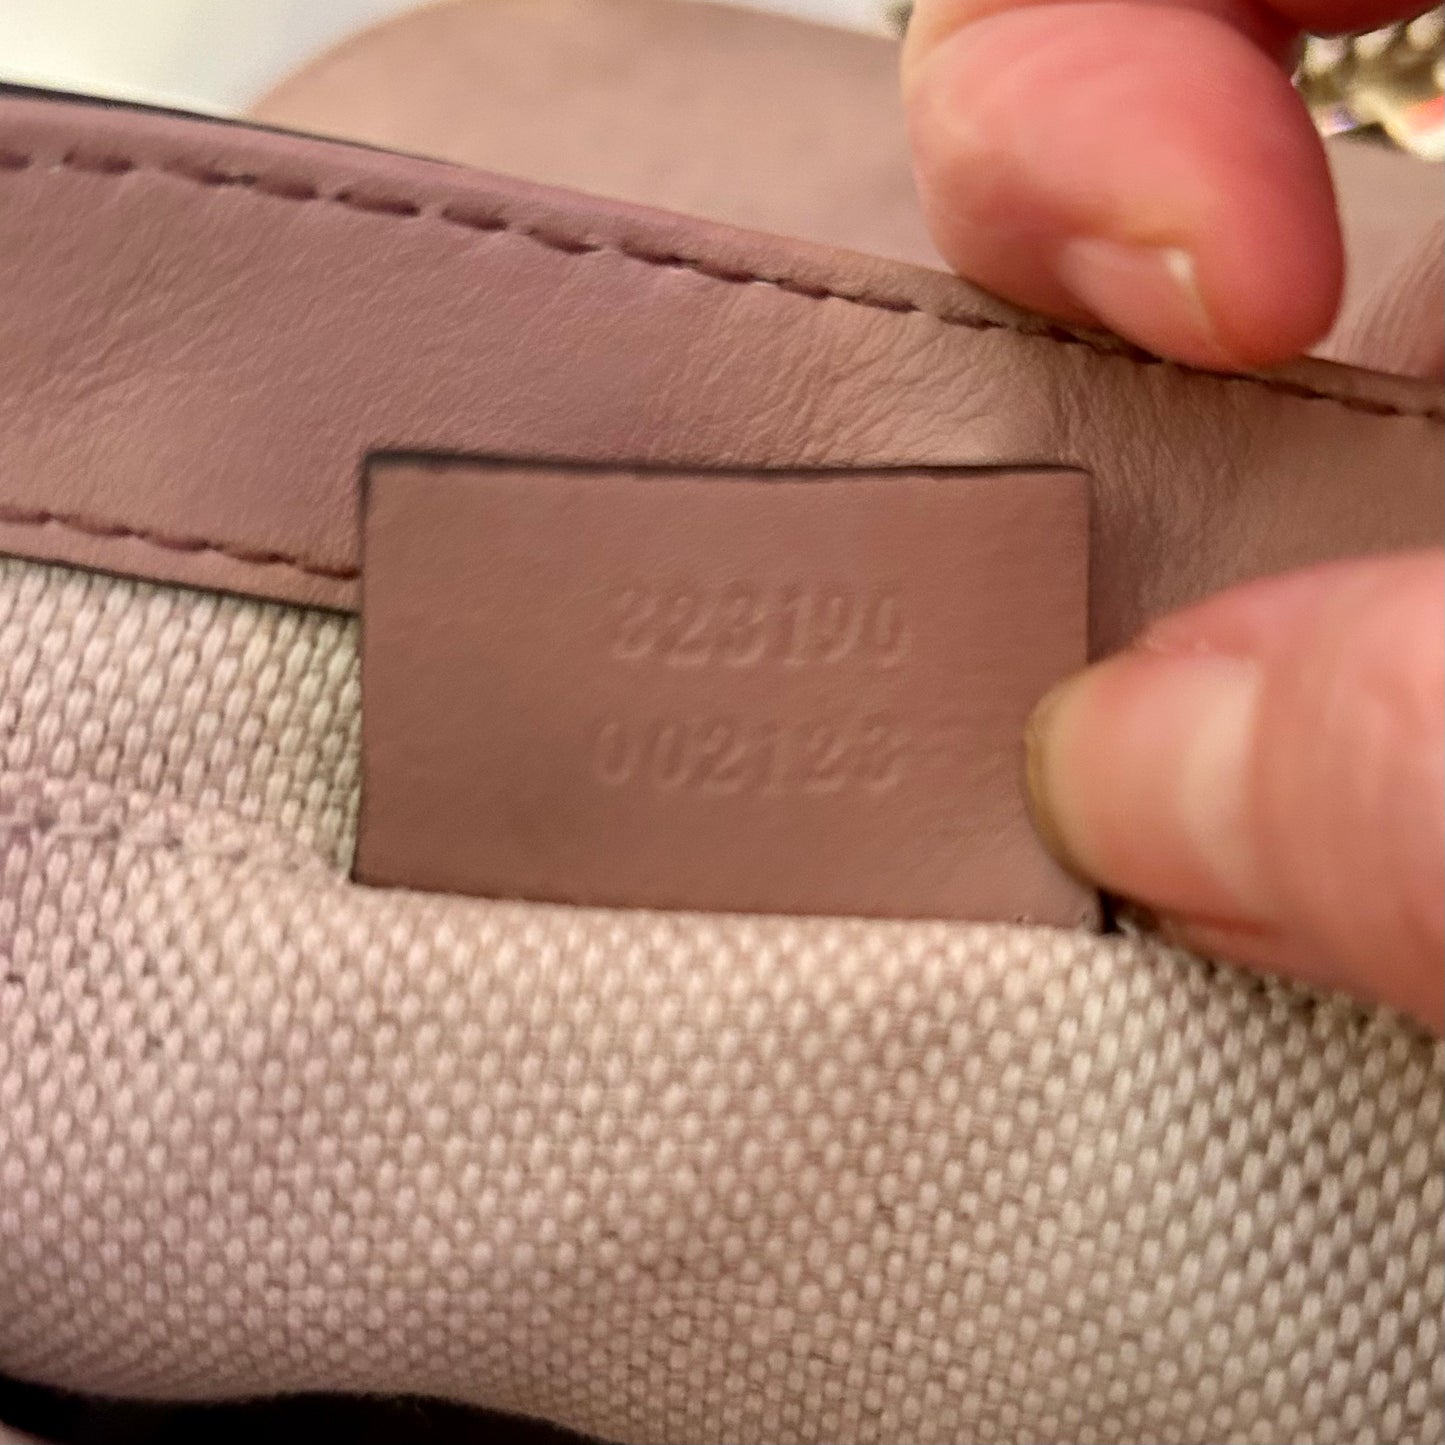 Gucci Soho Patent Leather Crossbody